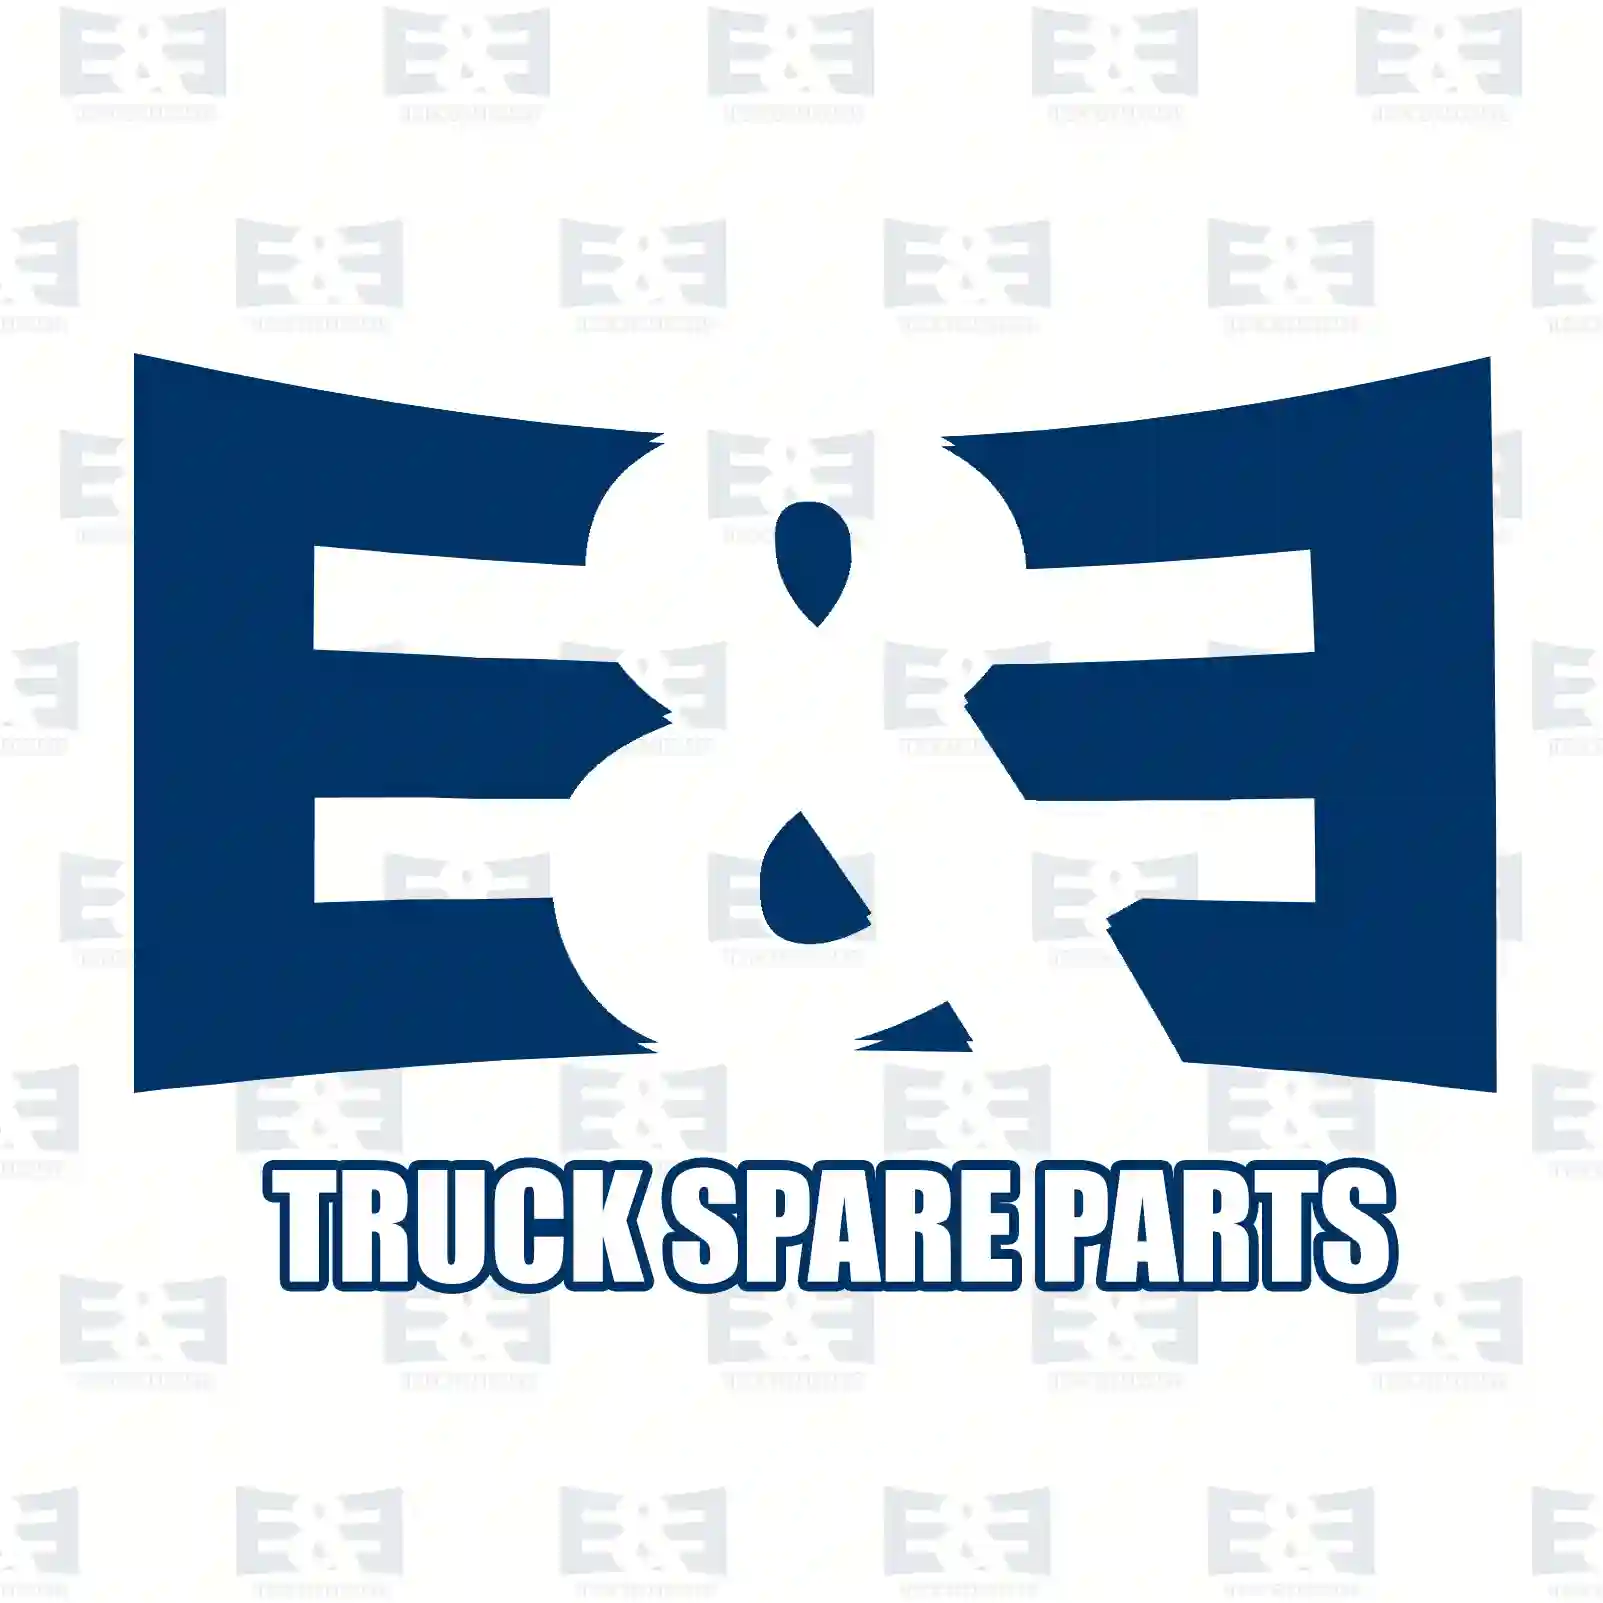 Spring Bracket Spring bushing, EE No 2E2283844 ,  oem no:1818034, BK21-5719-AC, E&E Truck Spare Parts | Truck Spare Parts, Auotomotive Spare Parts